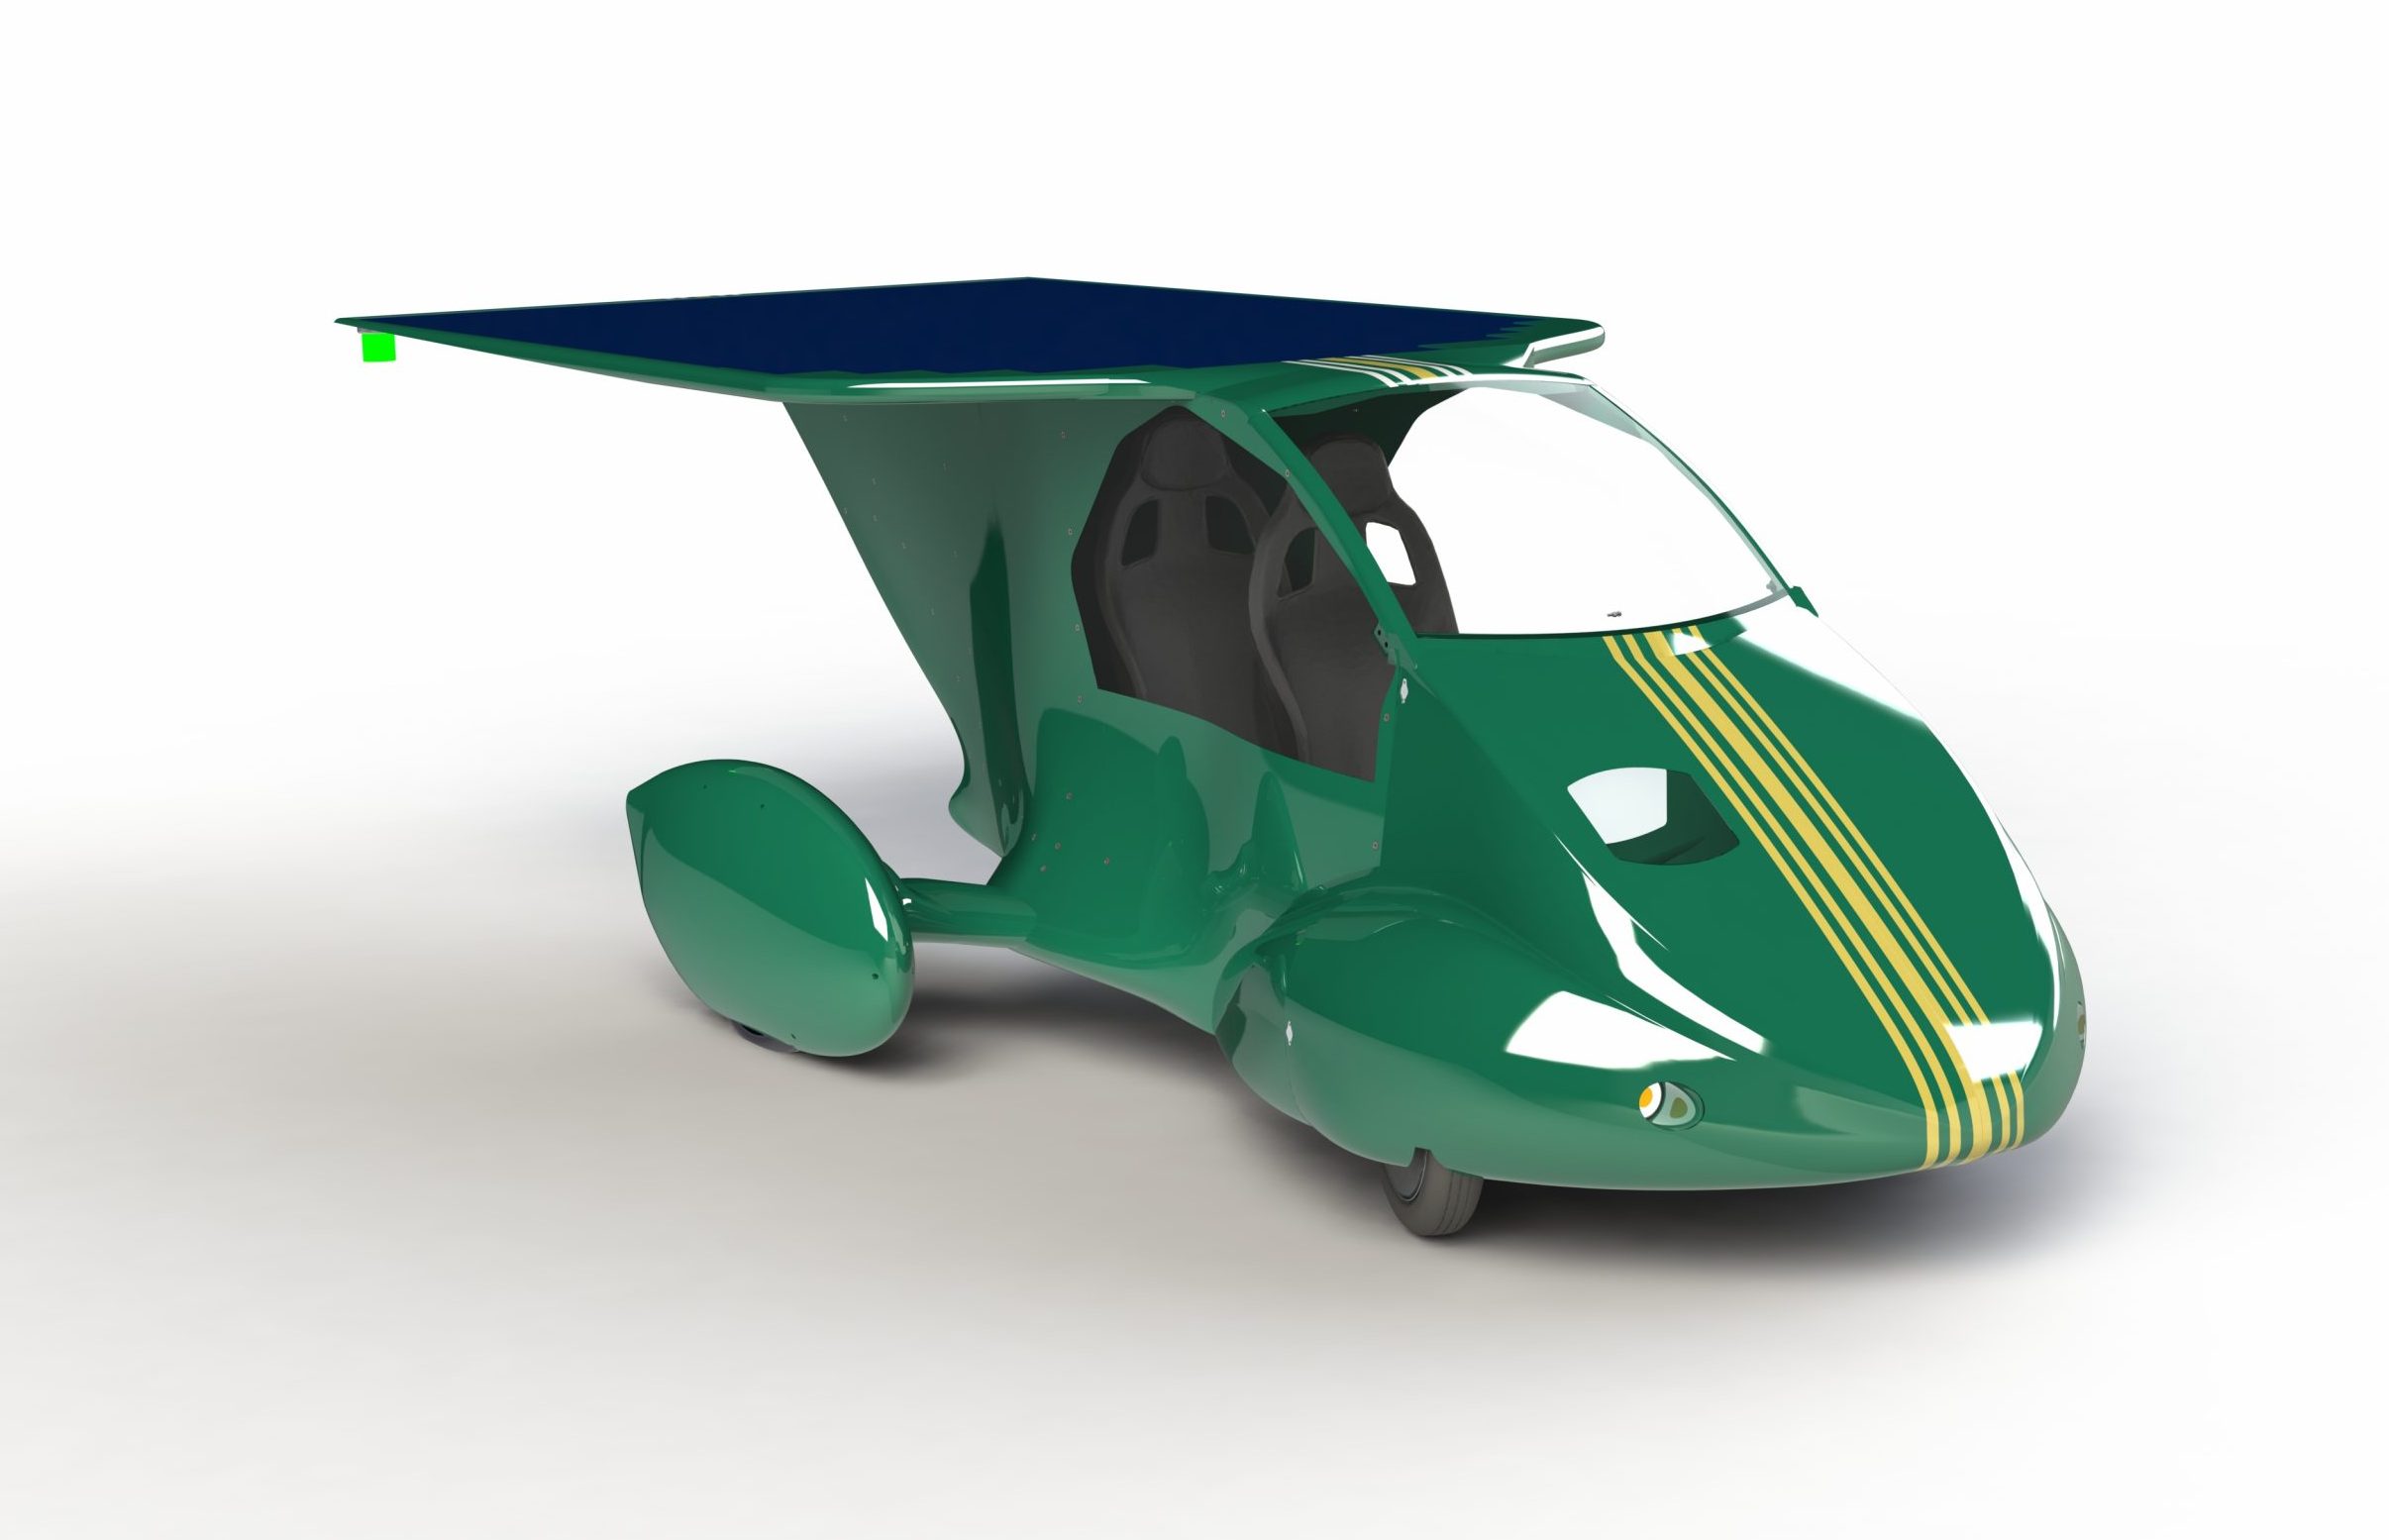 3d Design of the solar car